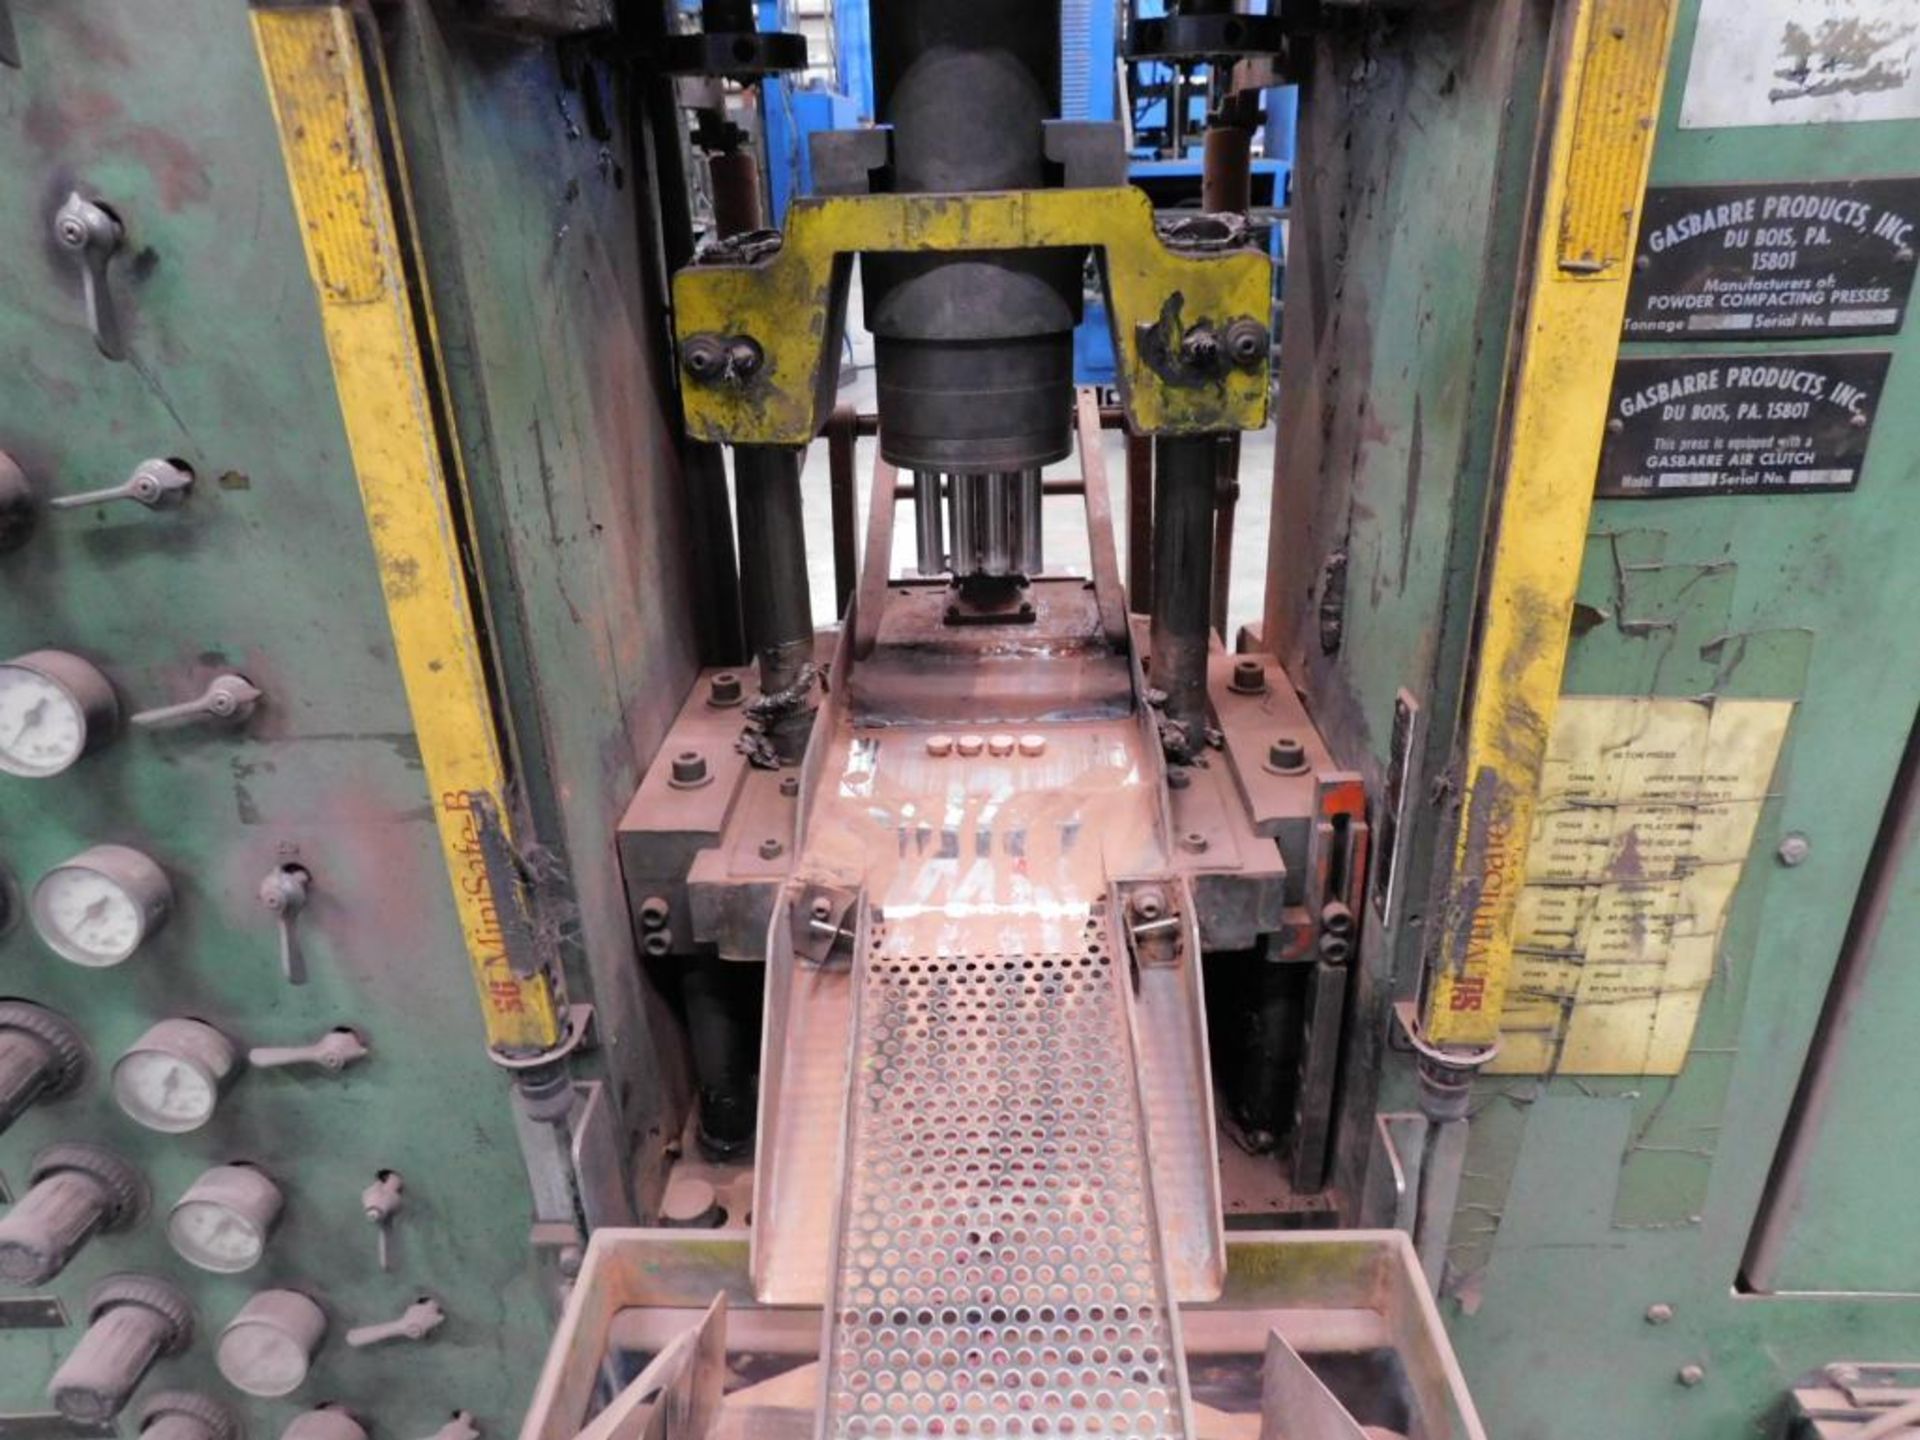 Gasbarre Powder Compacting Press, Mechanical, Model 30 Standard, S/N: 86256, 30 Ton Maximum Pressing - Image 9 of 22